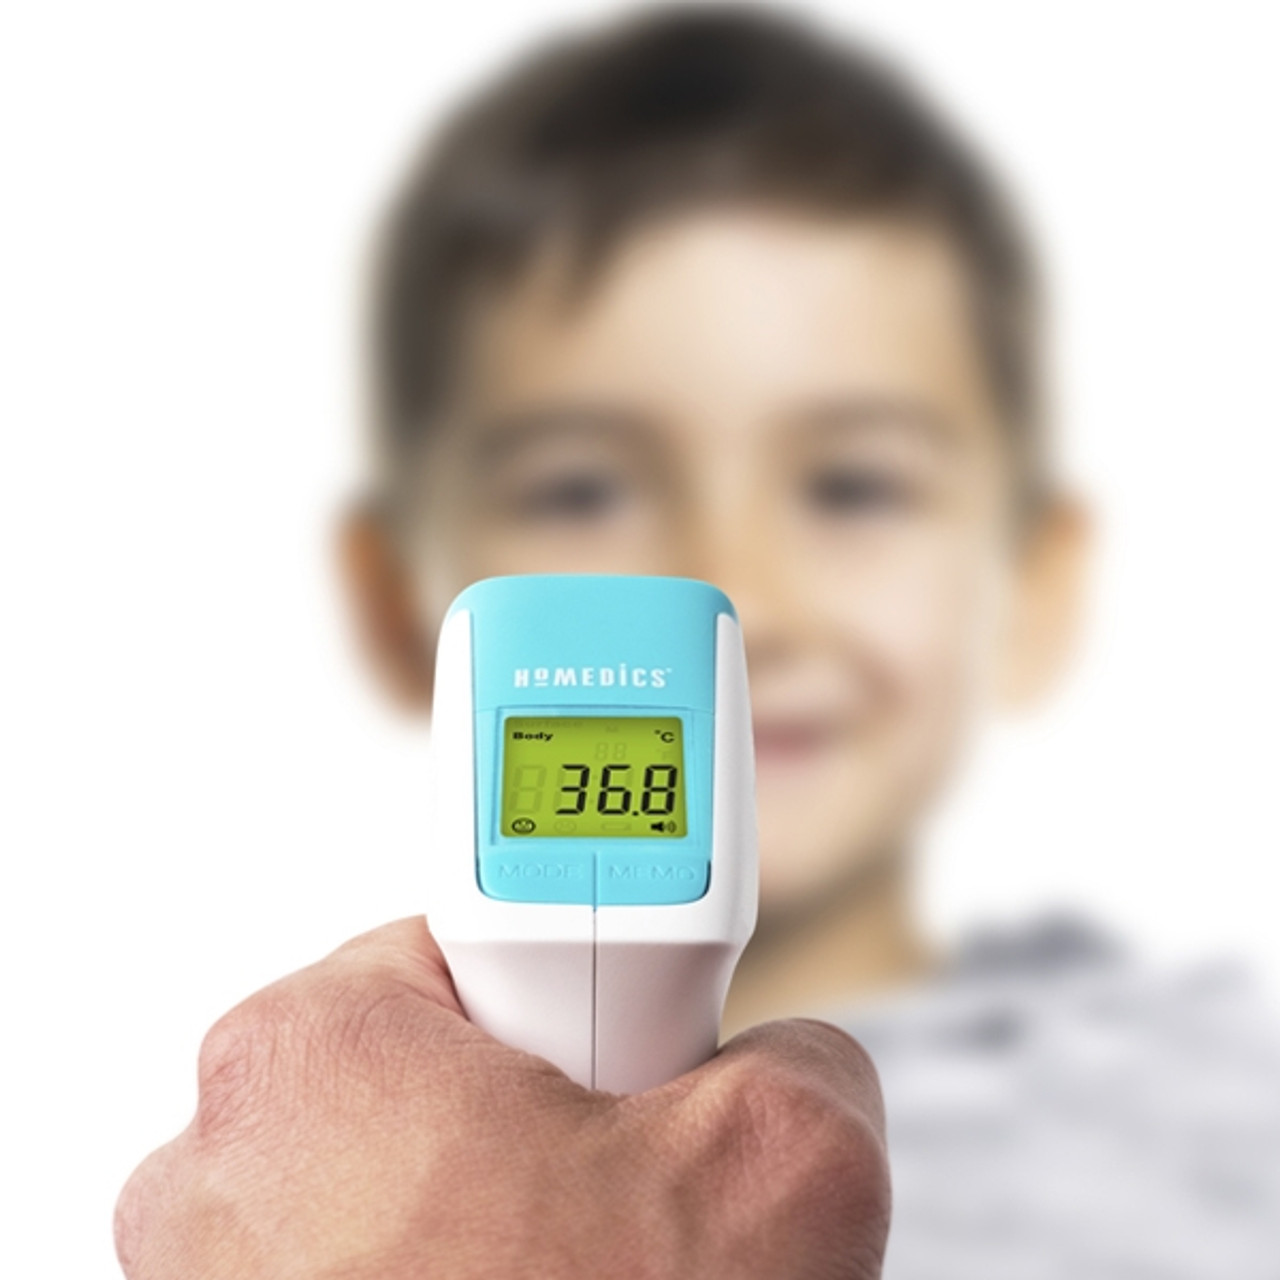 HoMedics 2 berührungsloses Infrarot-Thermometer